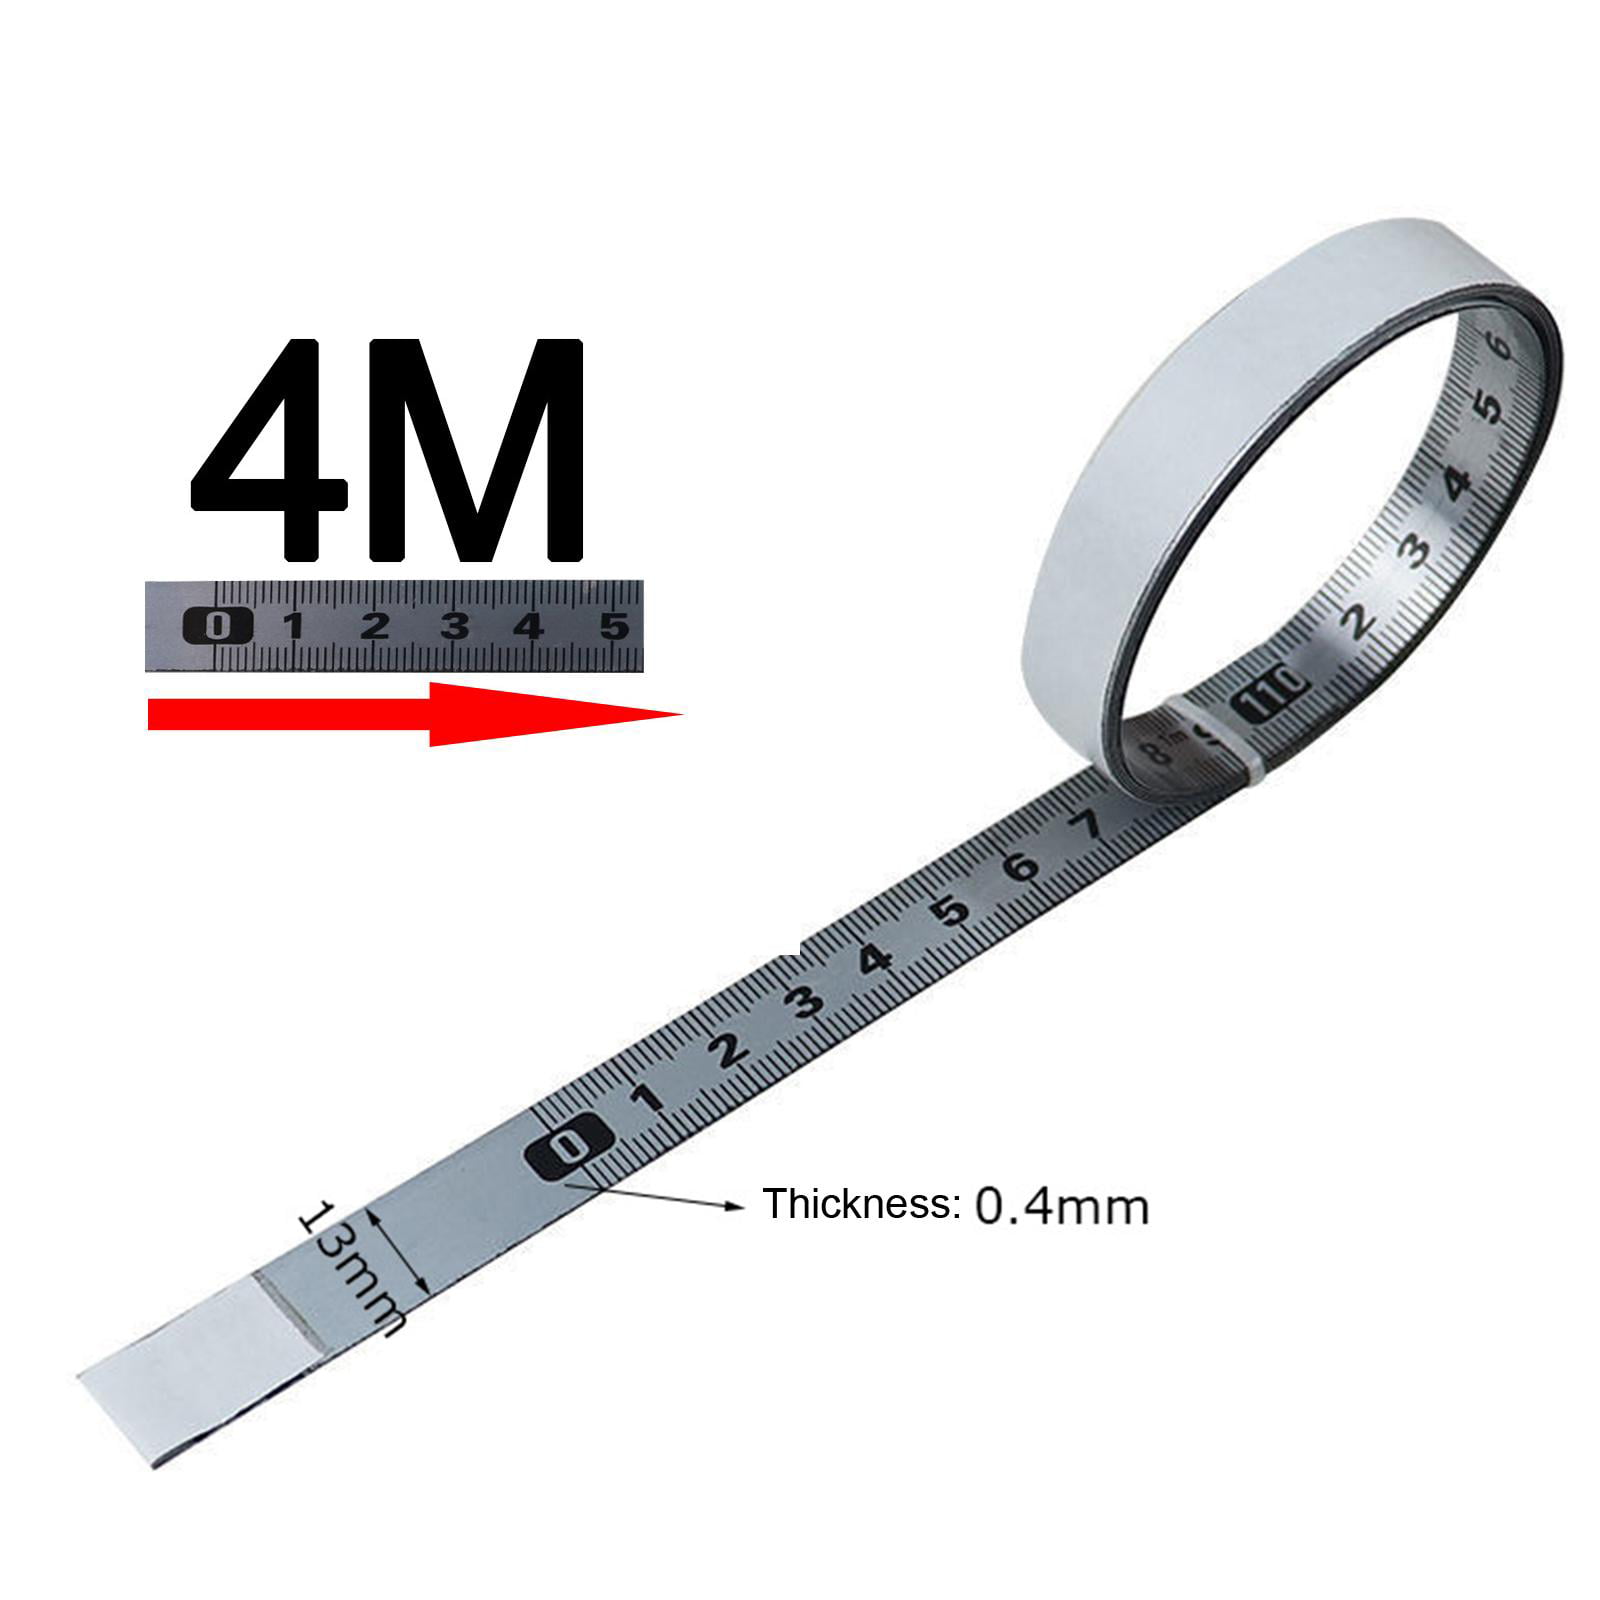 Industrial Adhesive Metric Rulers - Floor Marking Sign FS43101